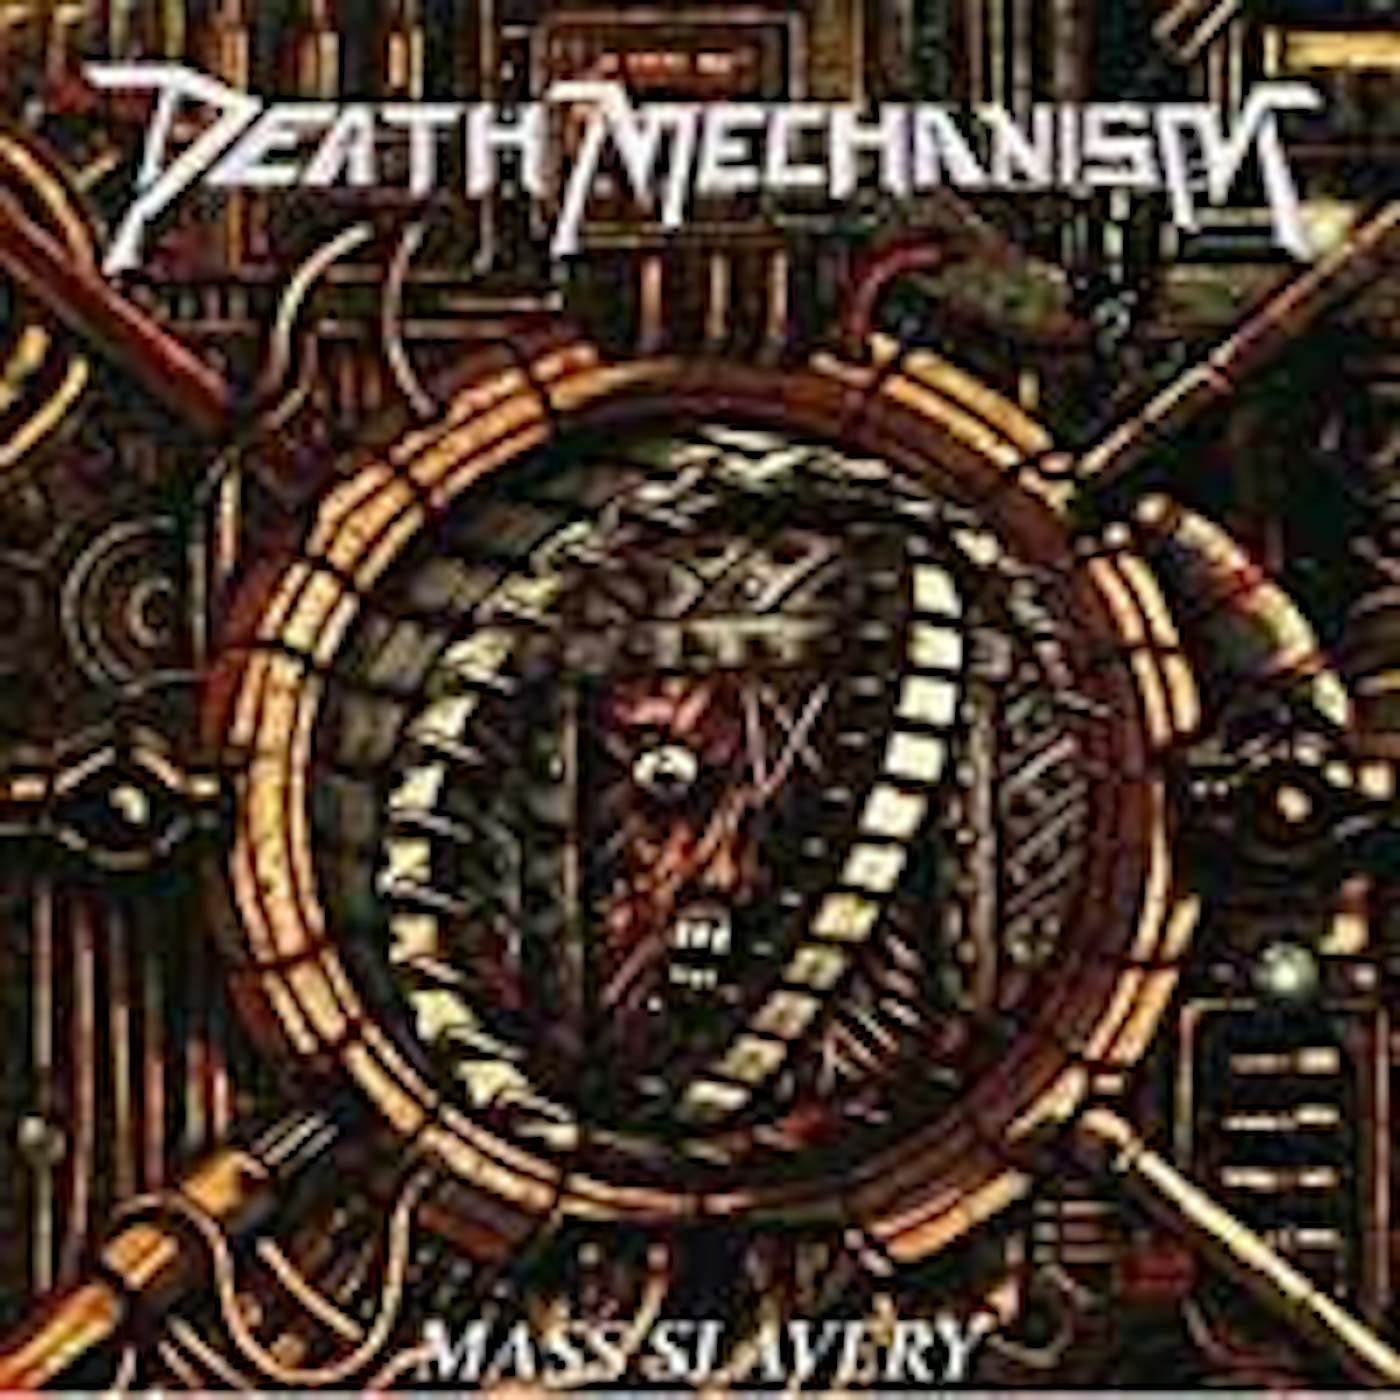 Death Mechanism LP - Mass Slavery (Vinyl)